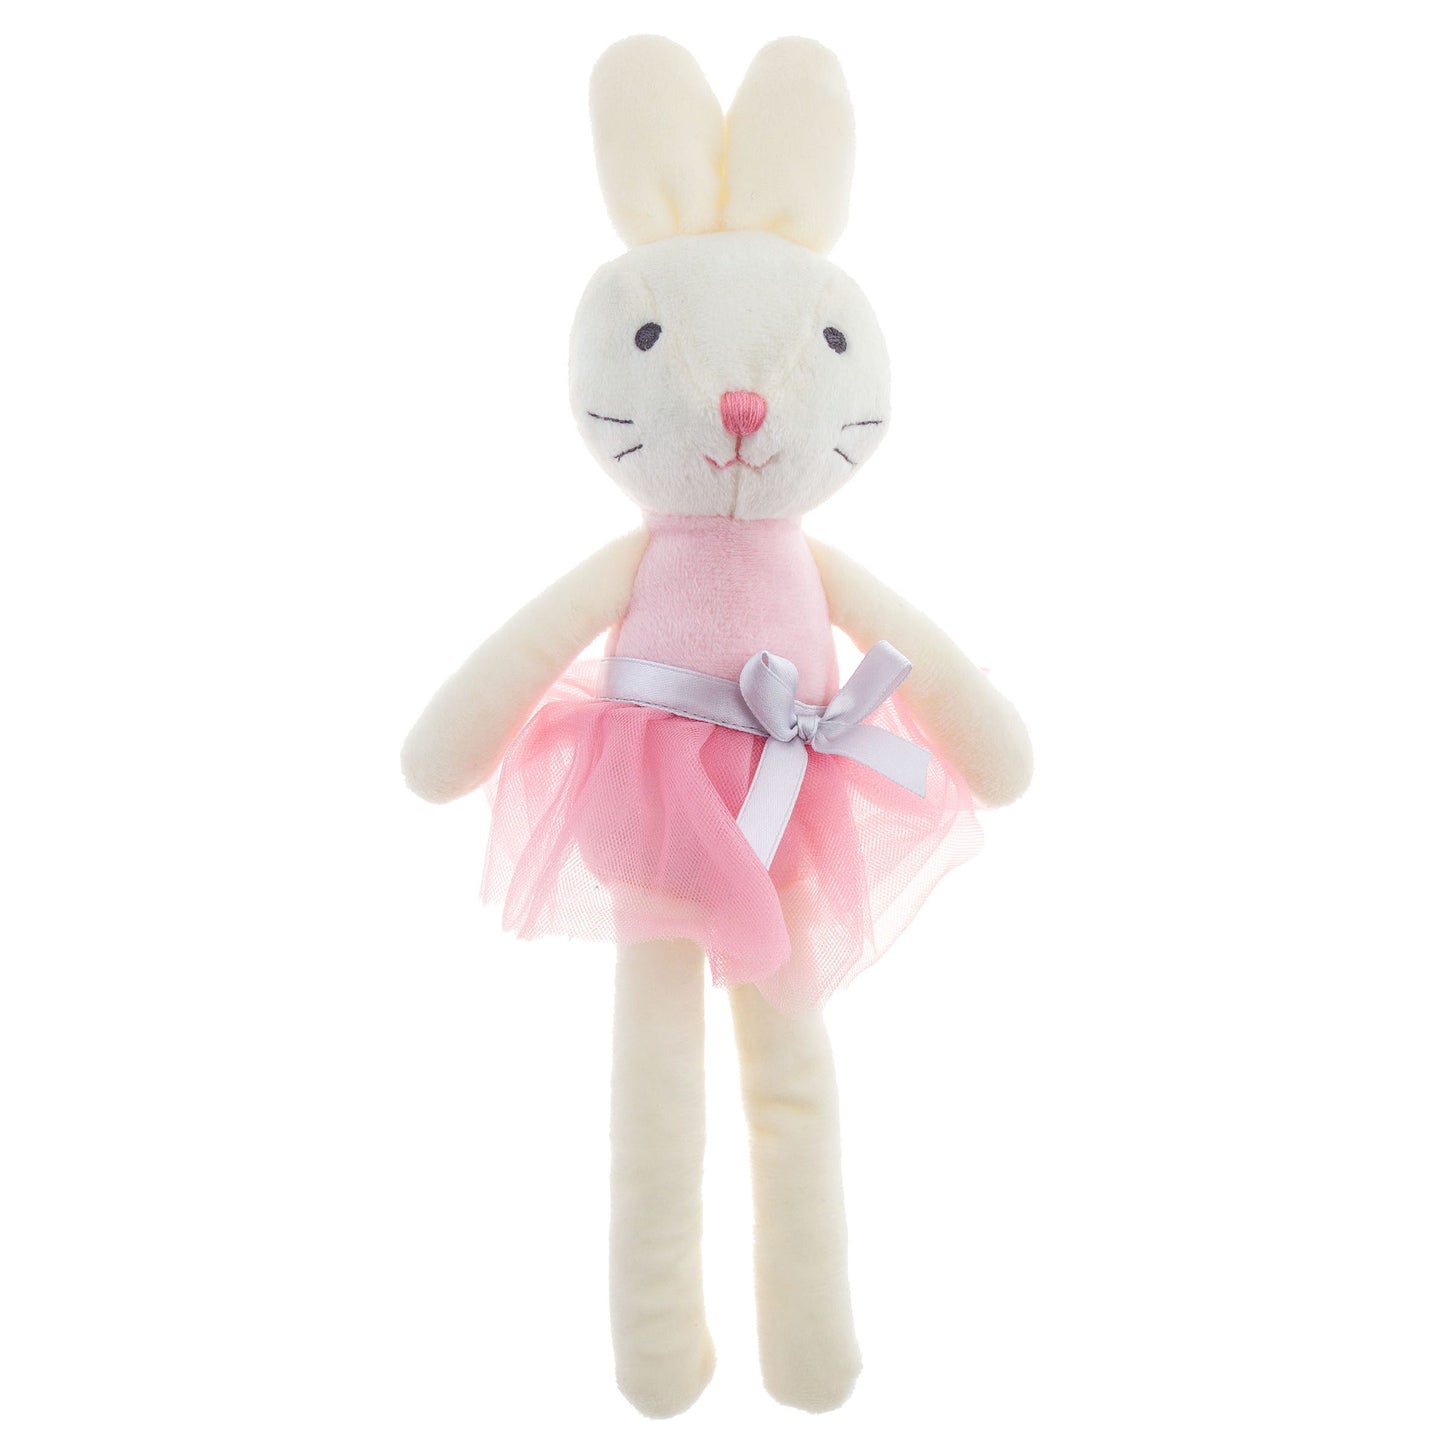 Stephen Joseph | Super Soft Small Plush Doll | Bunny